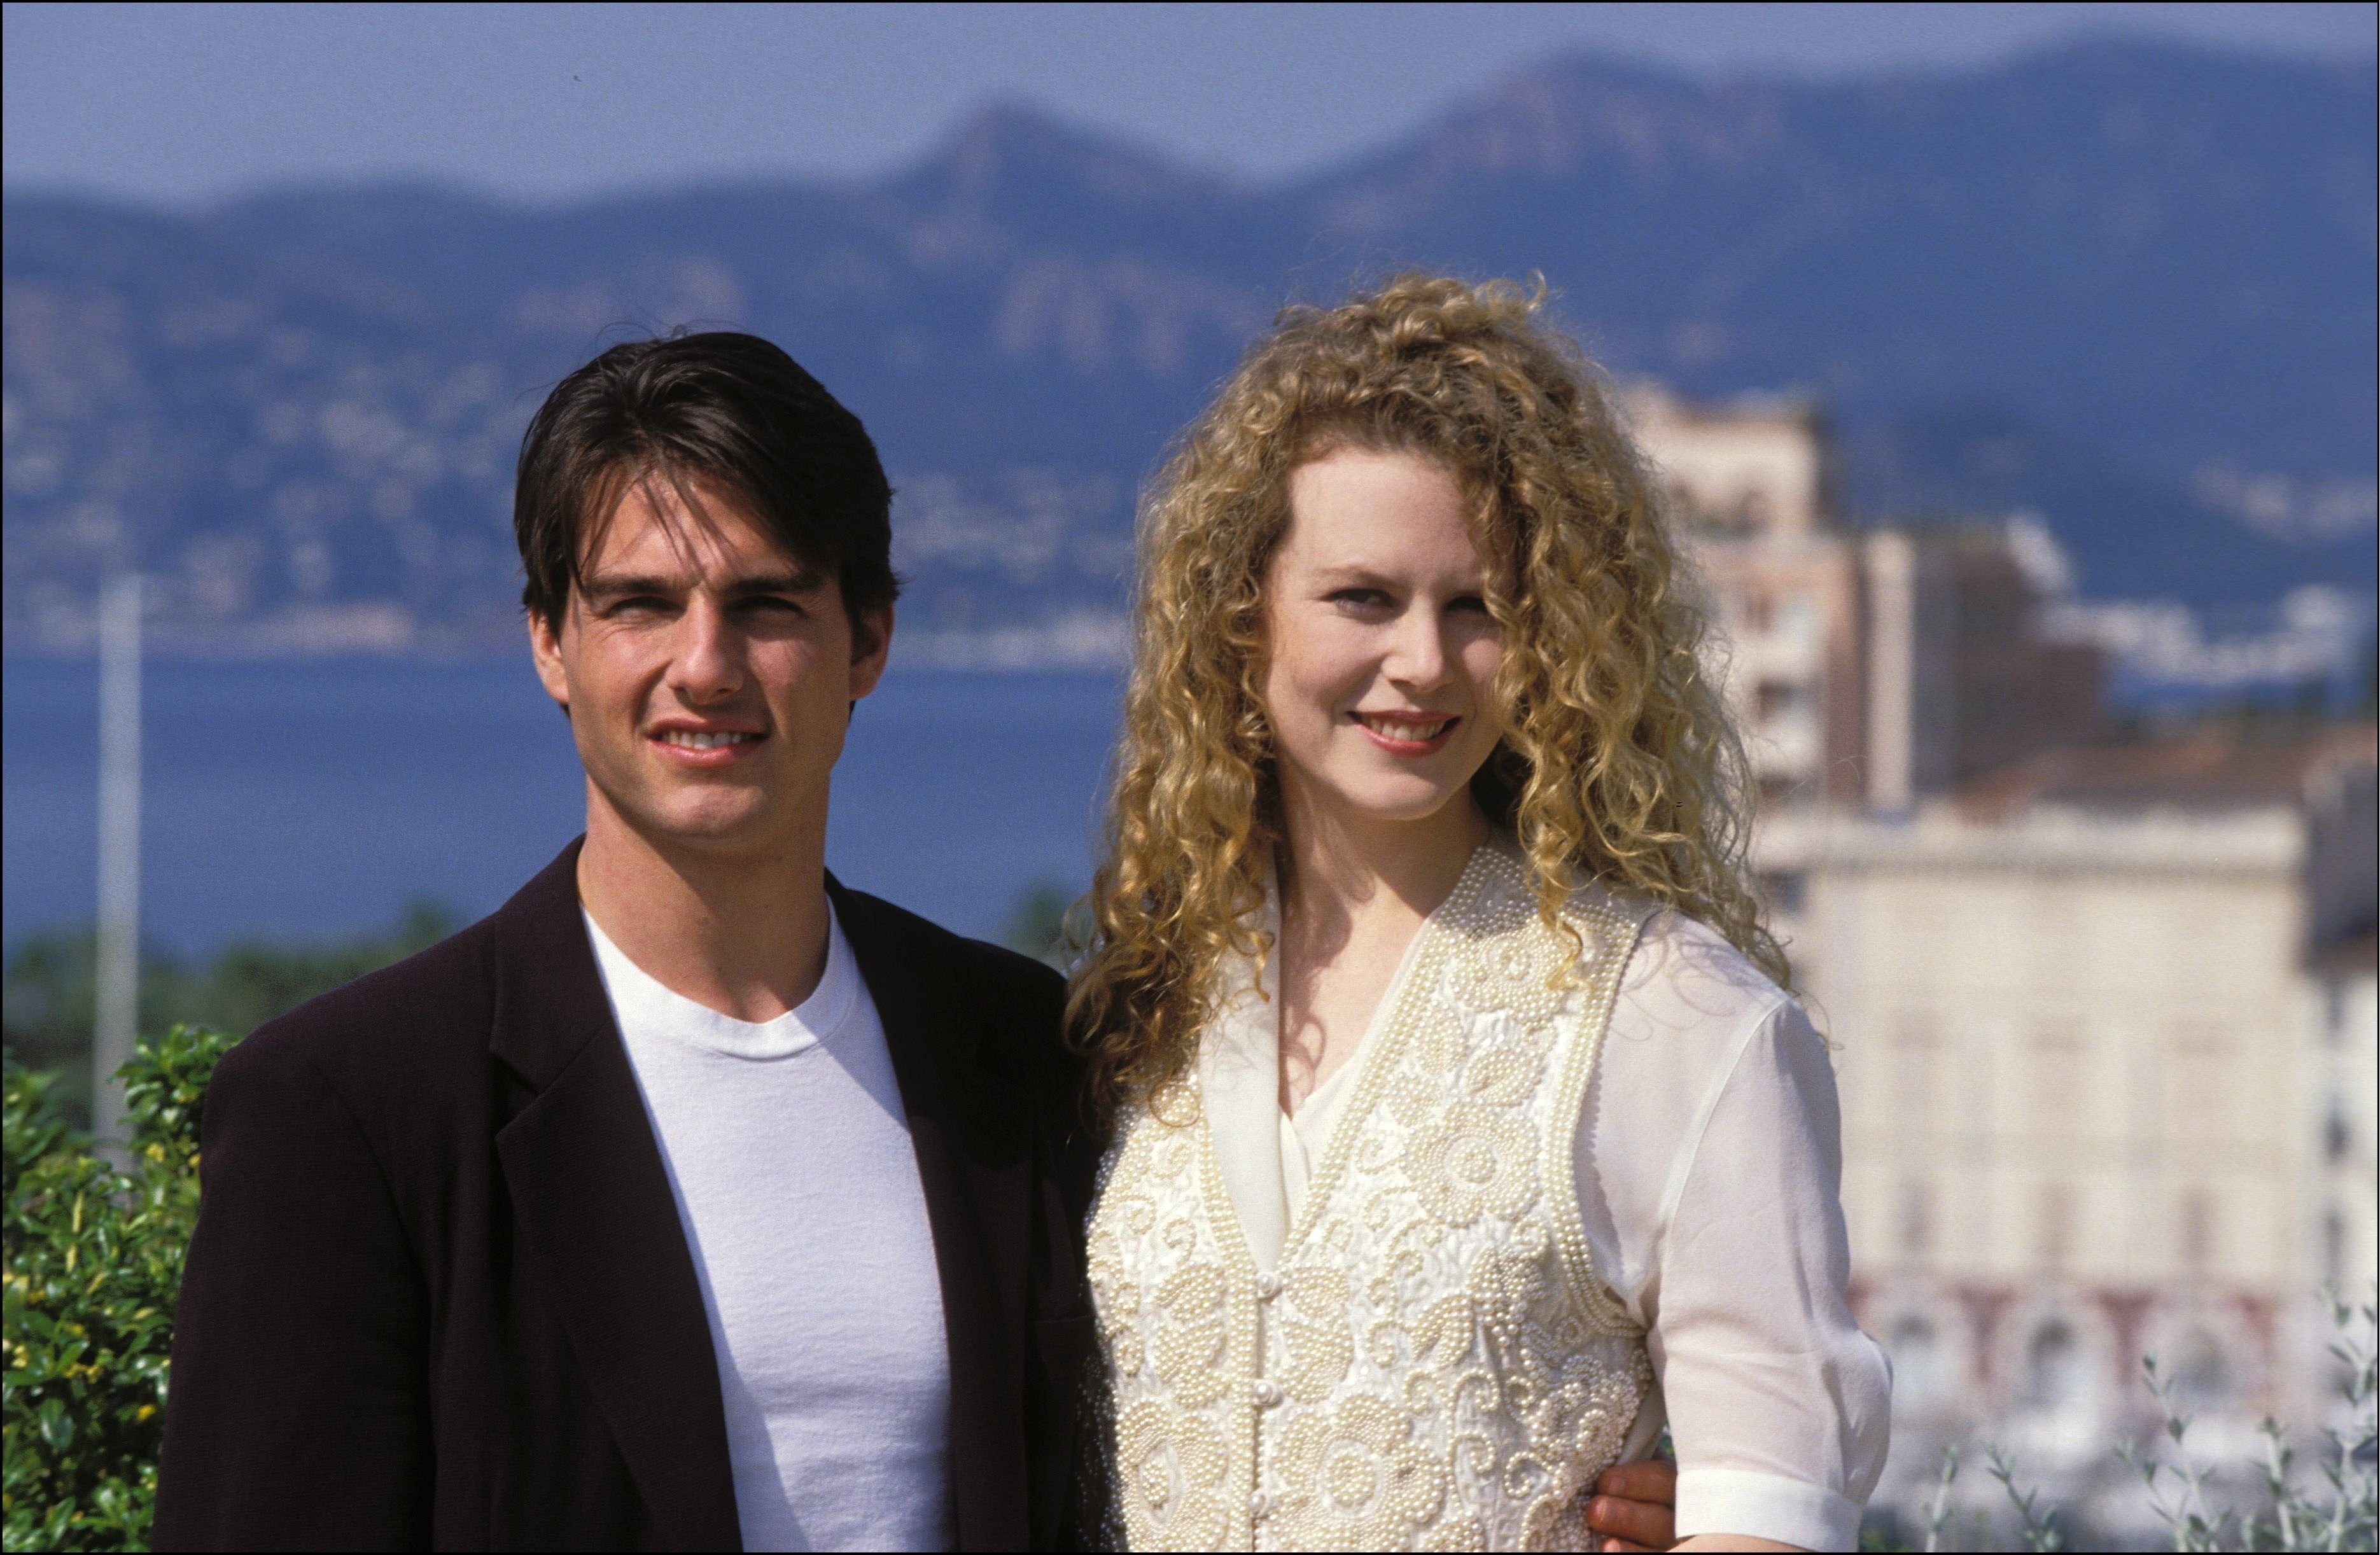 Tom Cruise and Nicole Kidman In Cannes, France | Photo: Pool BENAINOUS/DUCLOS/Gamma-Rapho via Getty Images